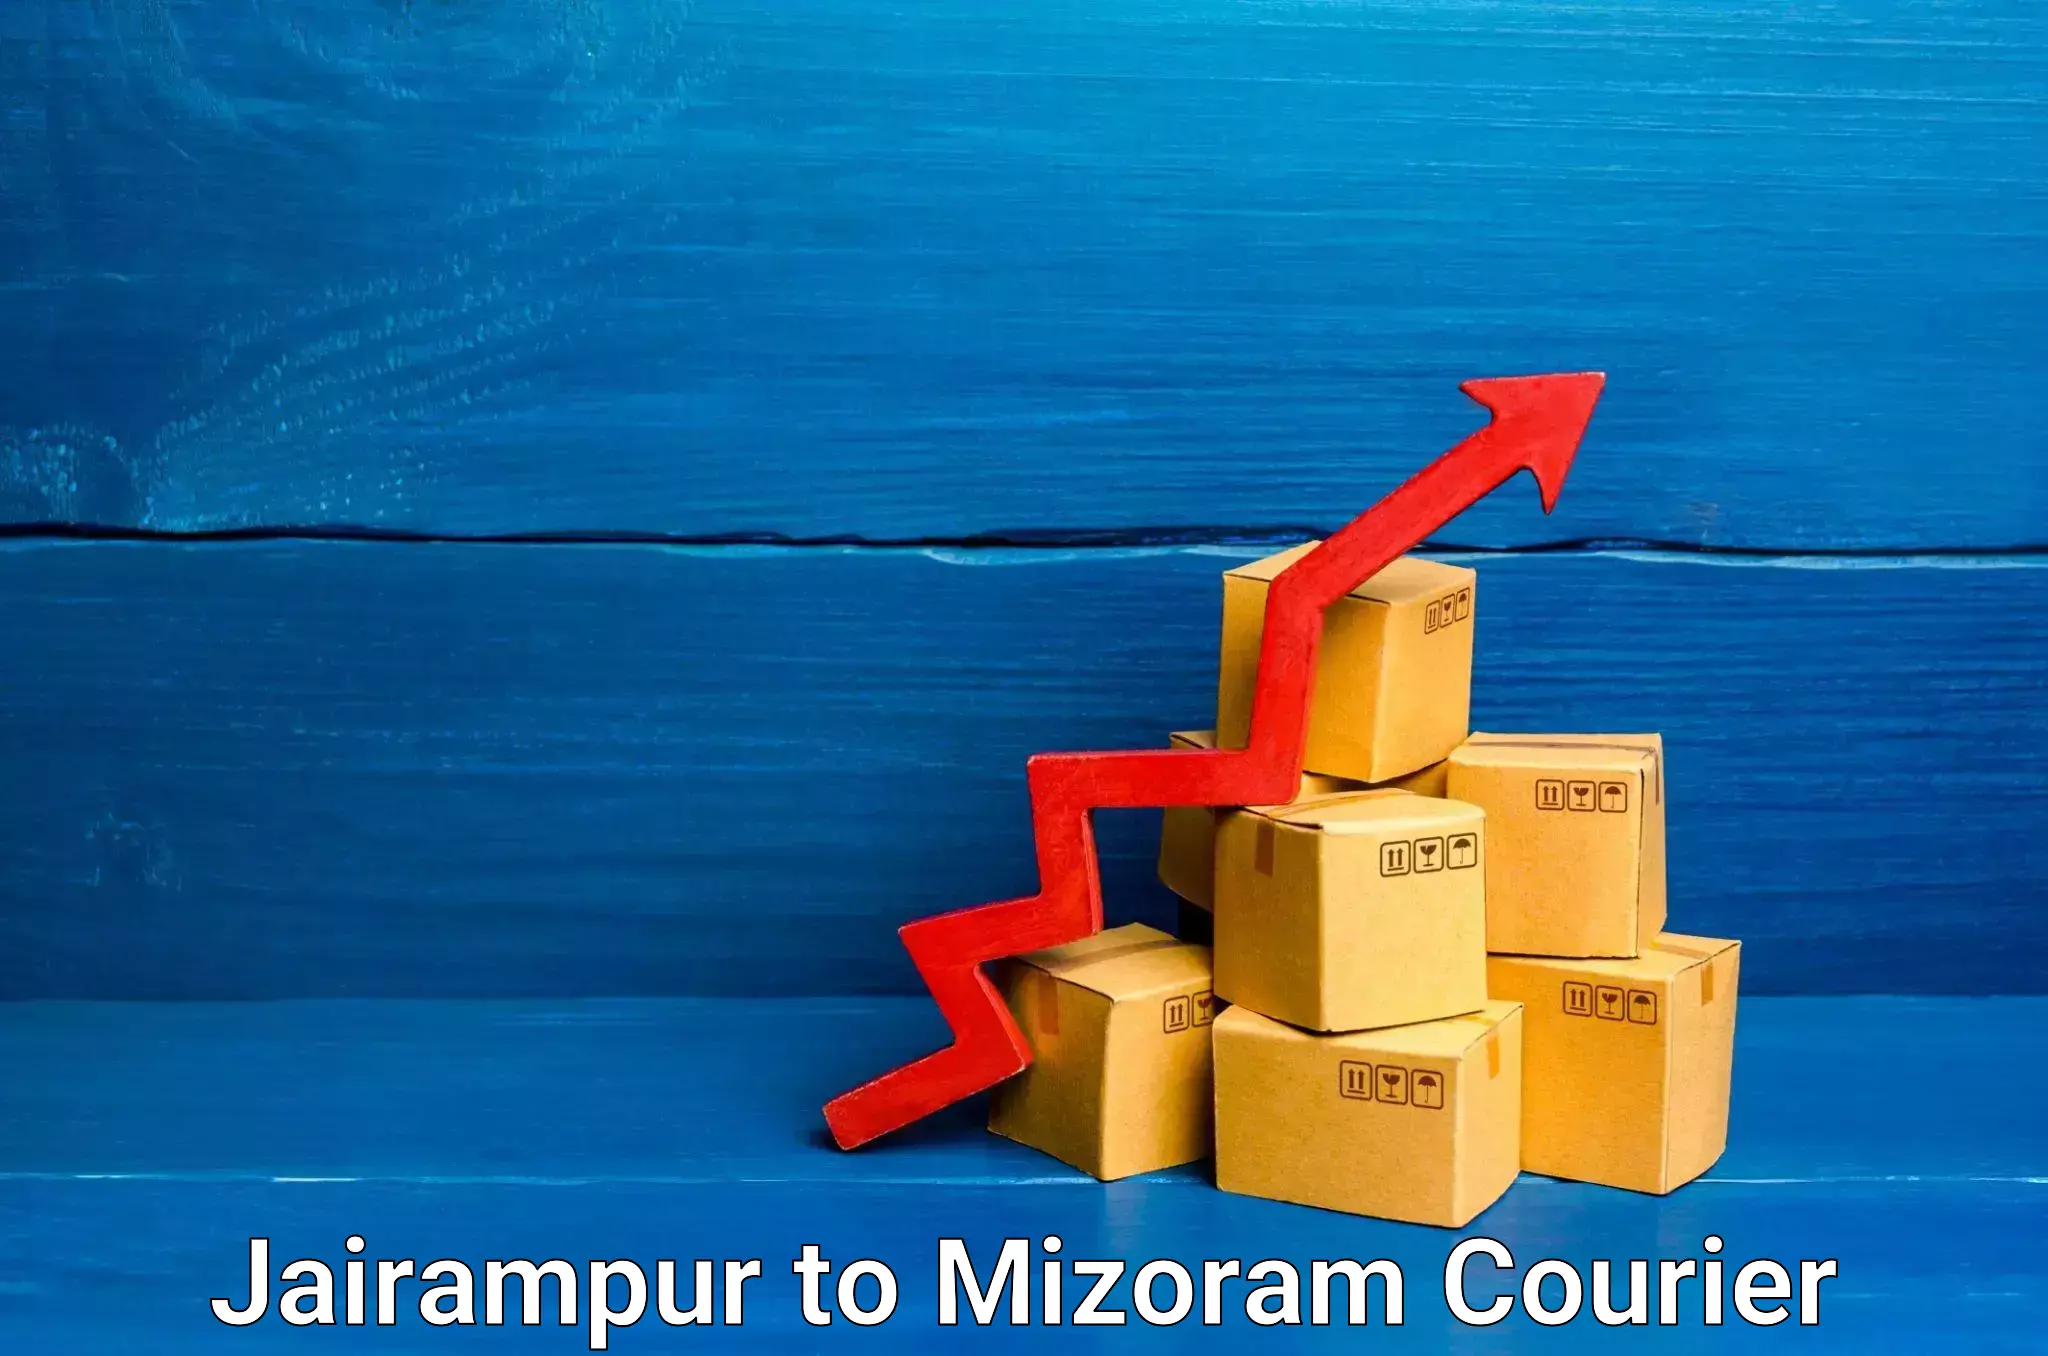 Reliable delivery network Jairampur to Mizoram